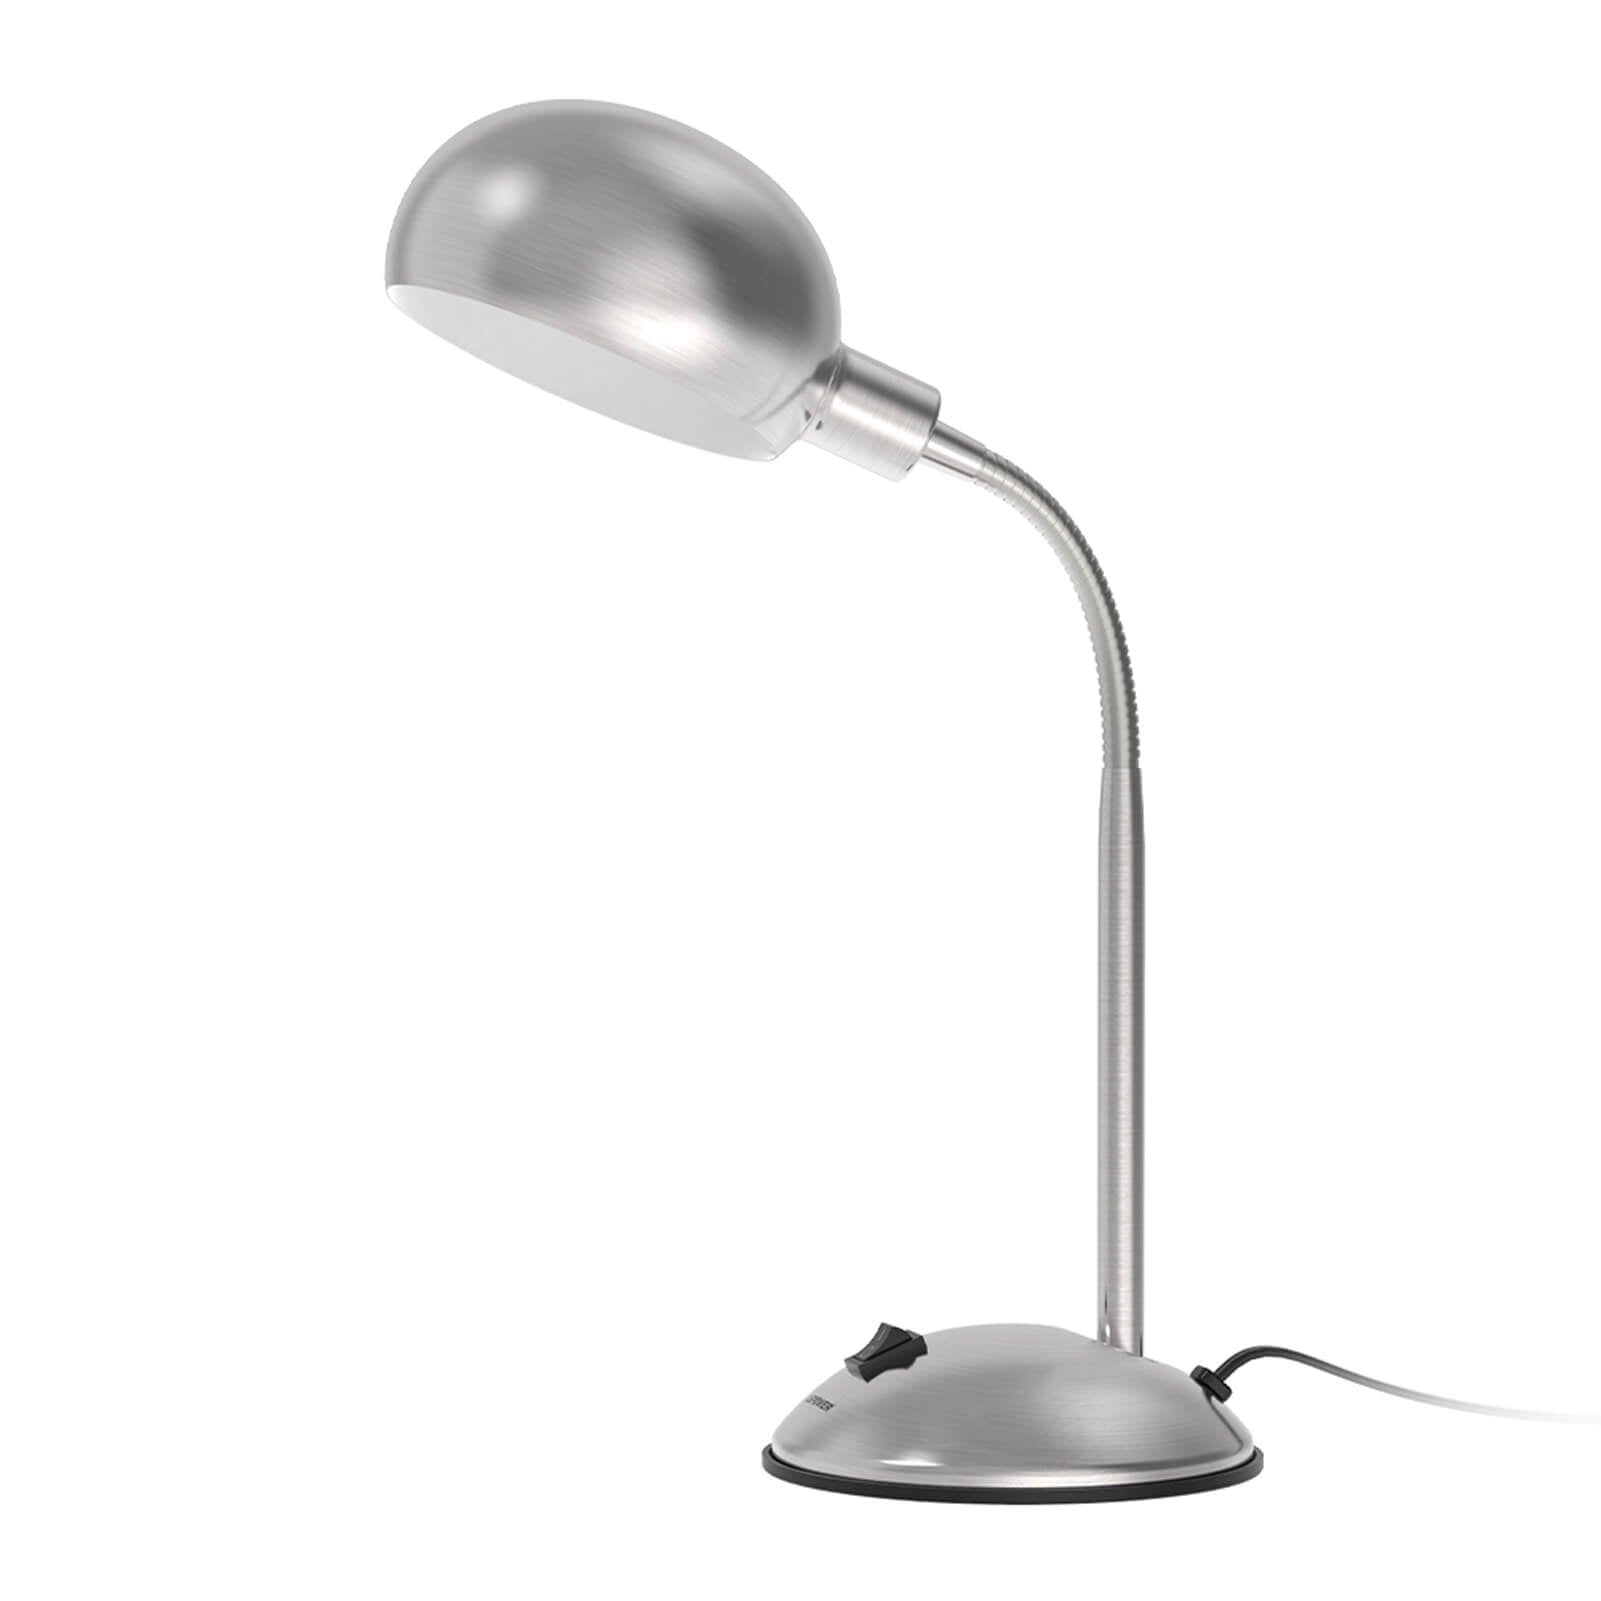 Flexible Gooseneck Metal Desk Lamp with E12 Lamp Base